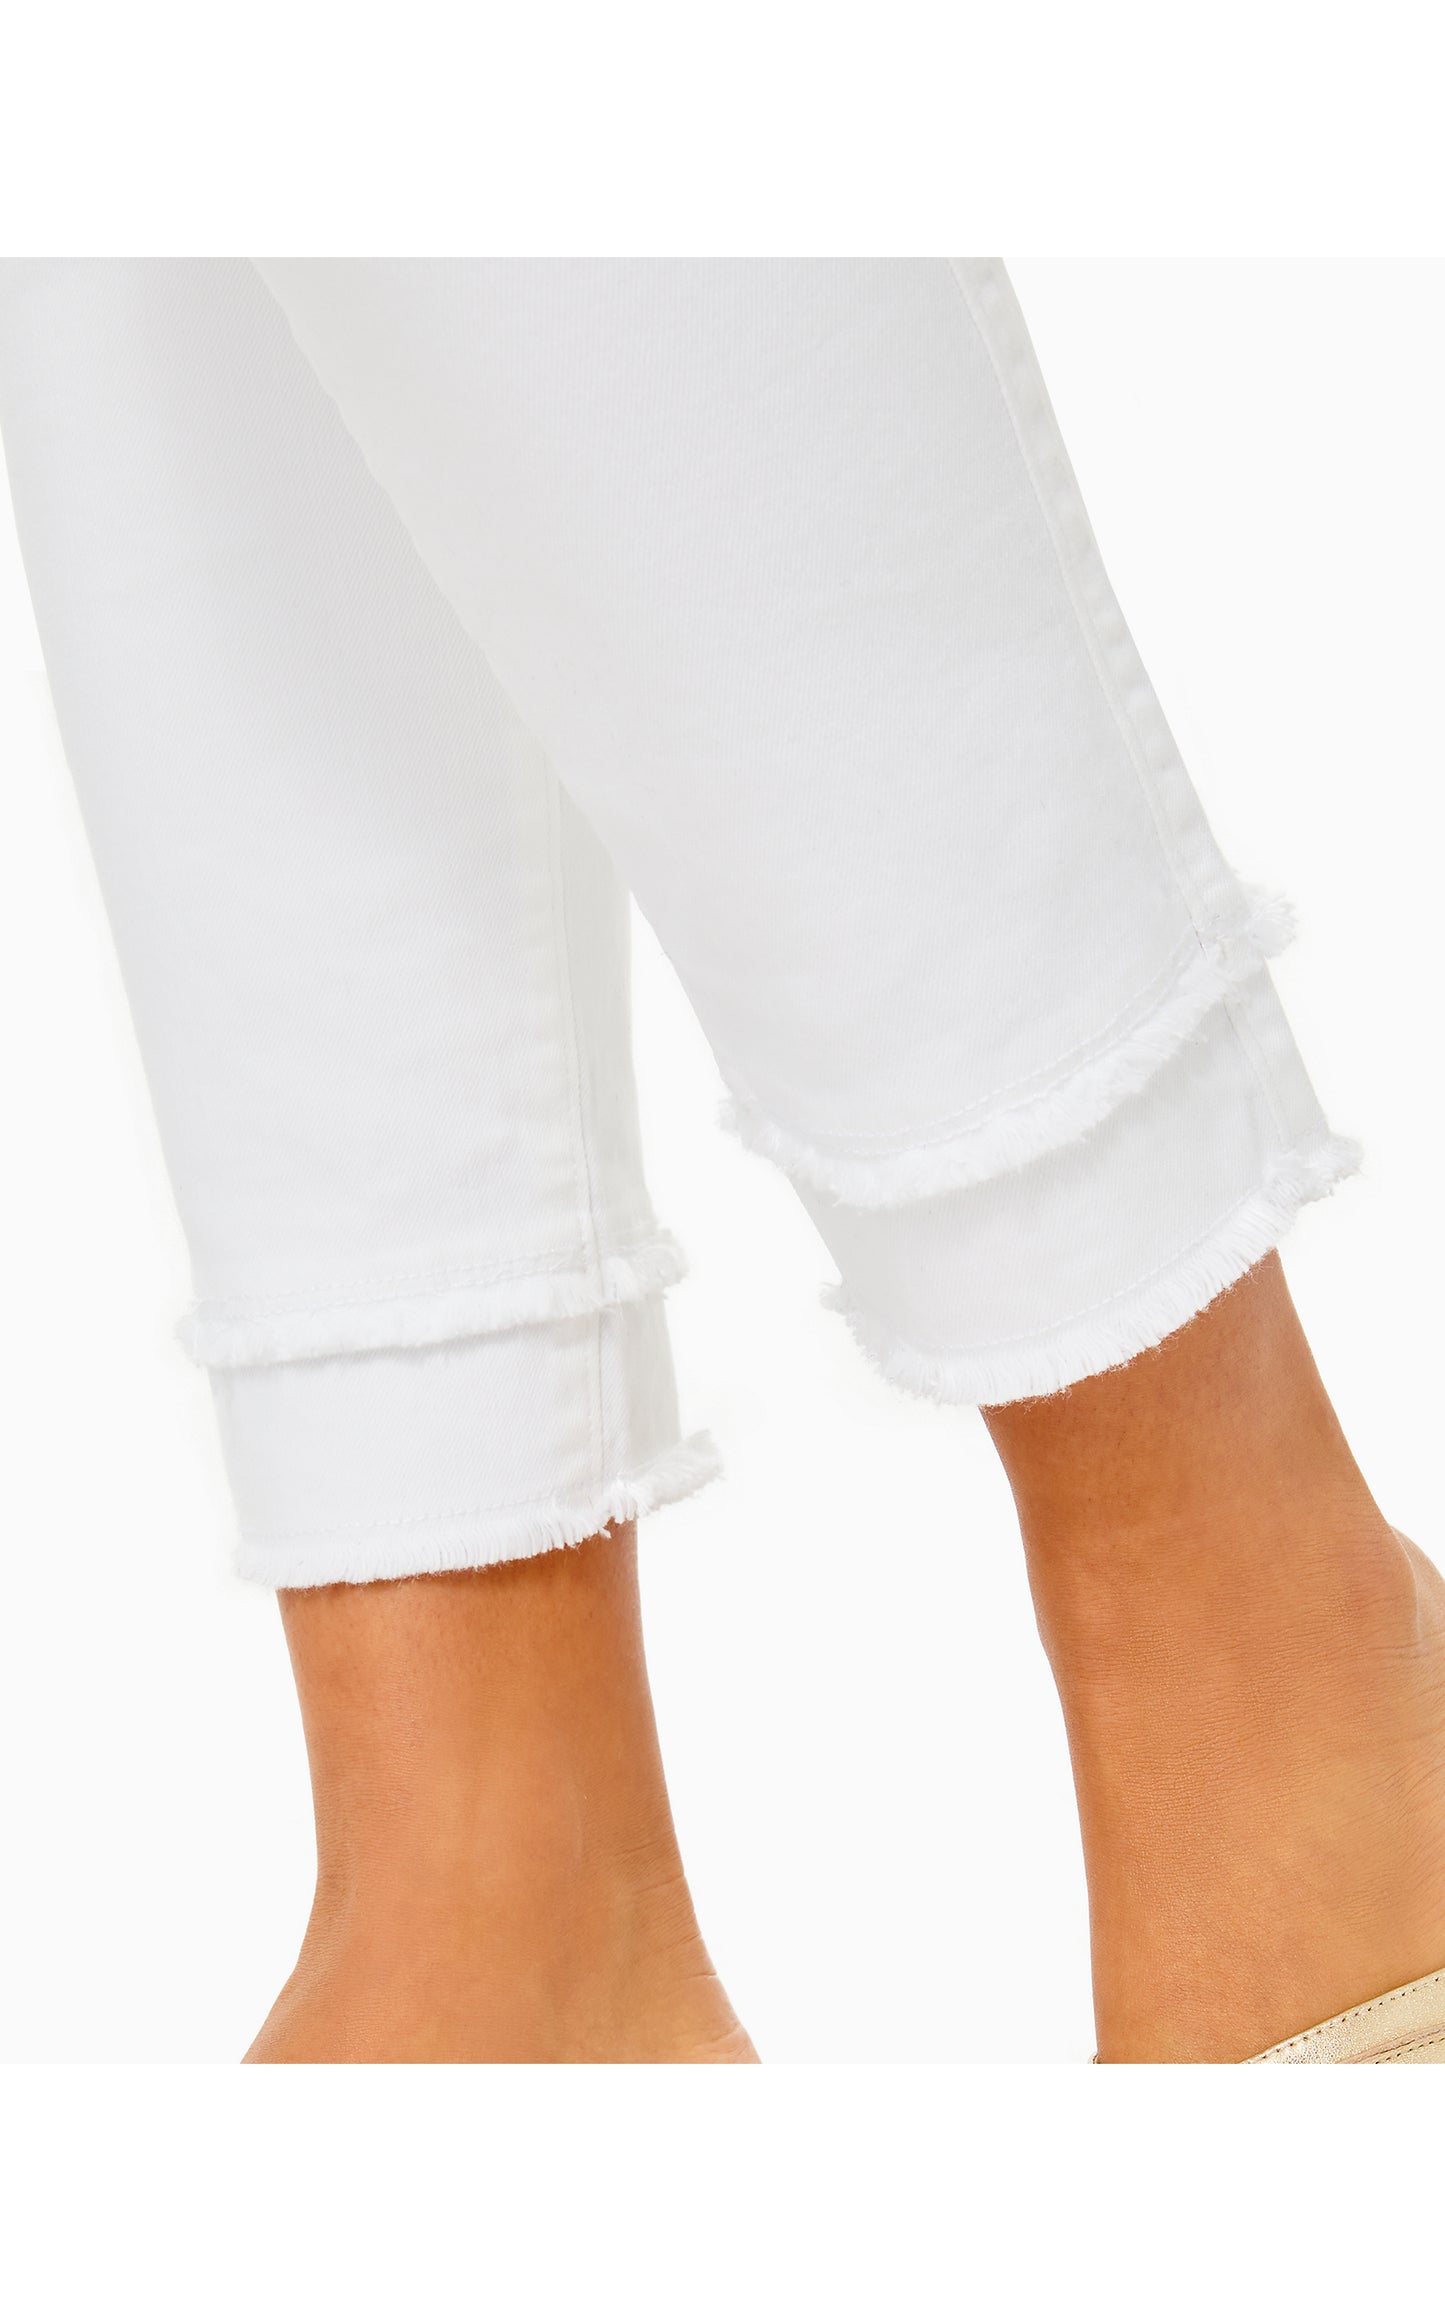 29" South Ocean High-Rise Skinny Jean in Resort White